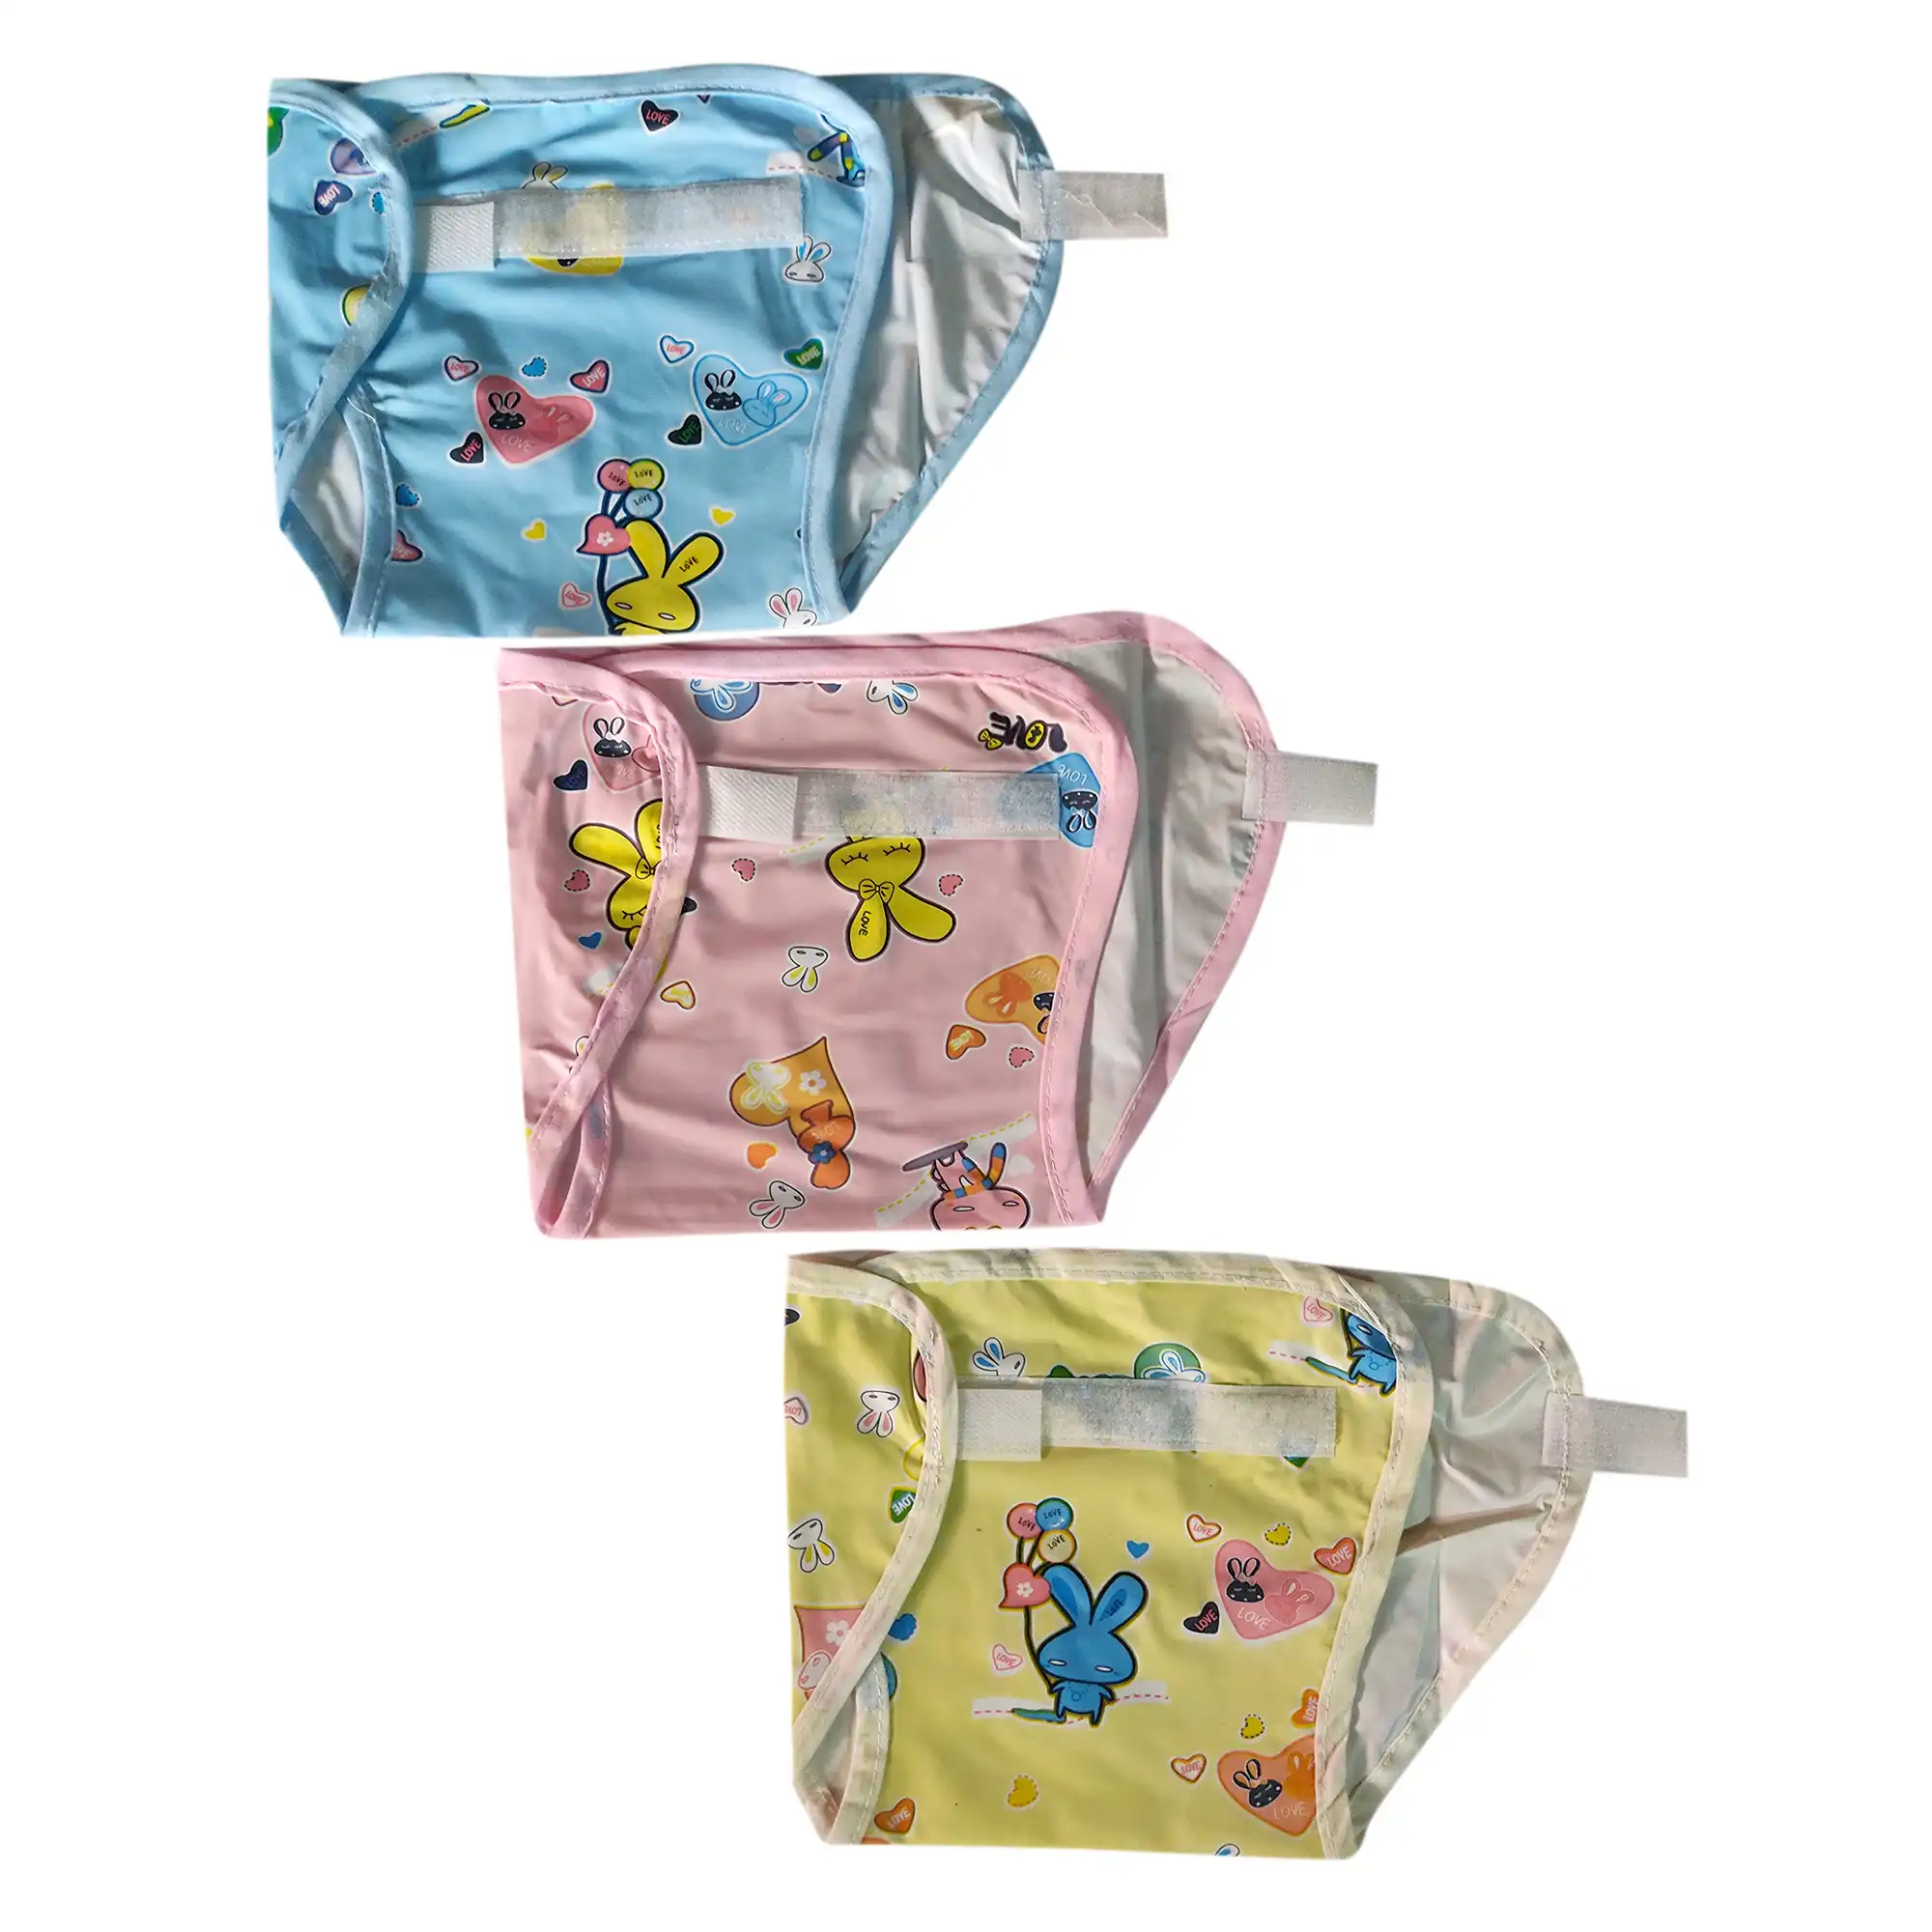 Newborn Plastic Baby Diapers Set of 3 11